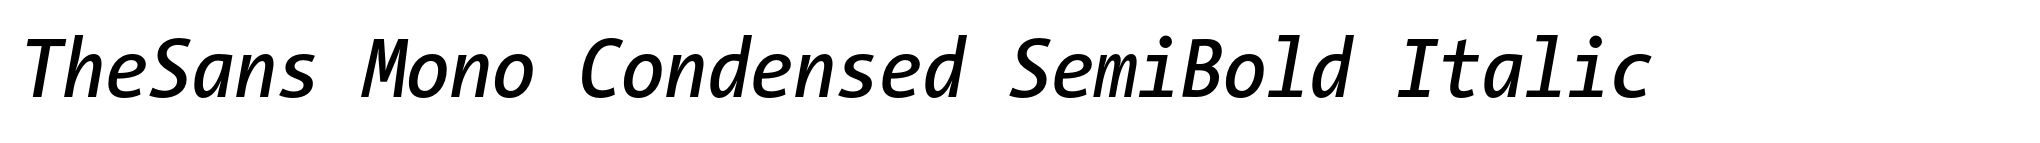 TheSans Mono Condensed SemiBold Italic image